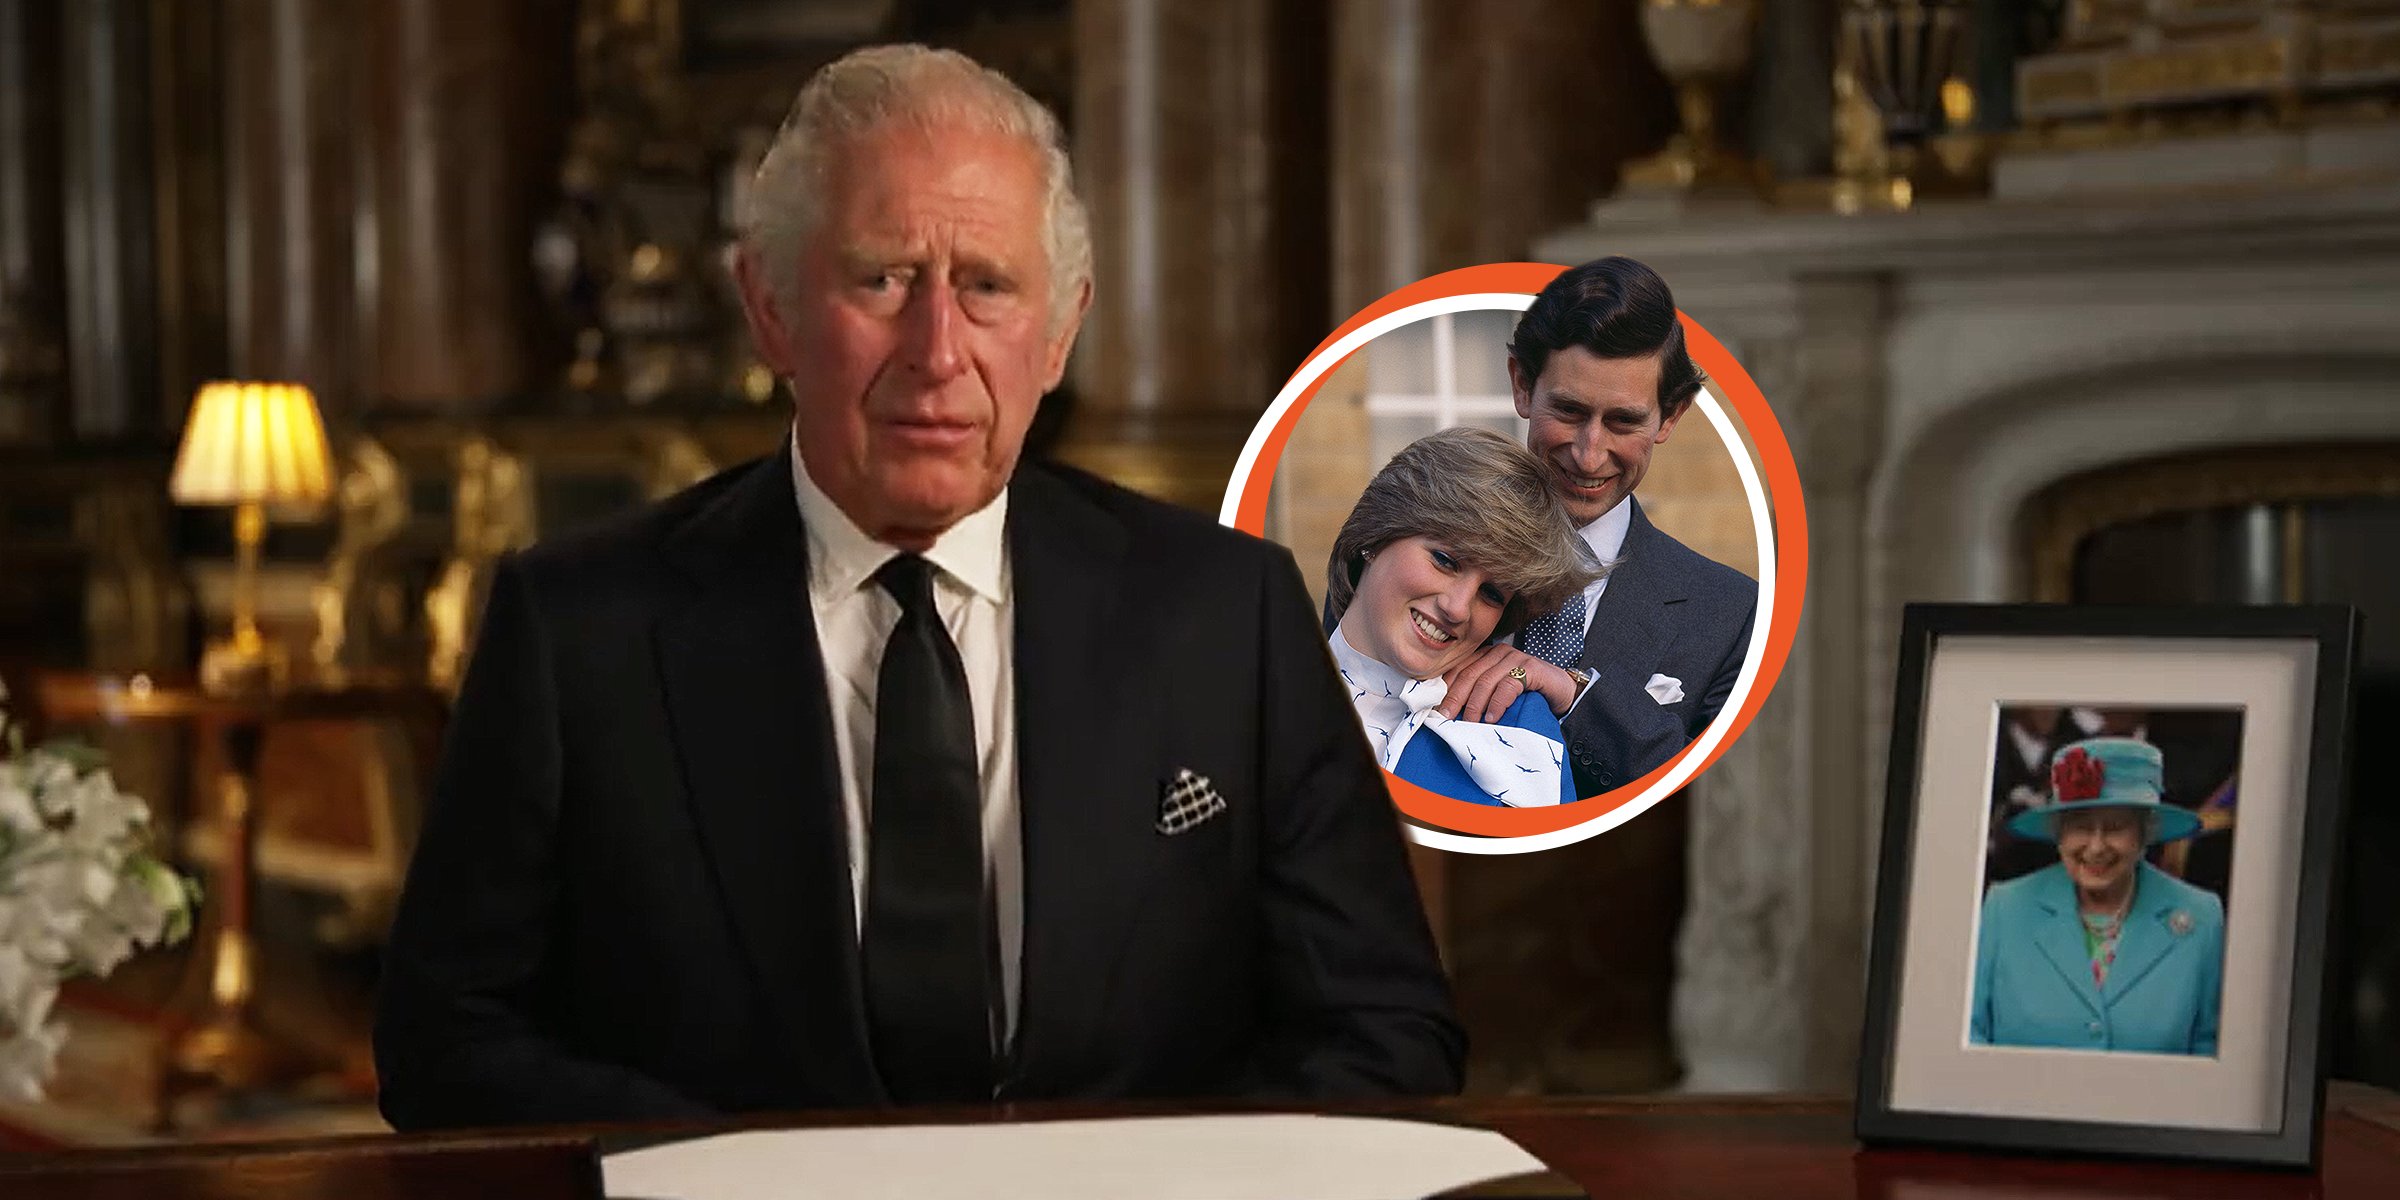 King Charles III ┃Princess Diana and Prince Charles ┃Source: Getty Images